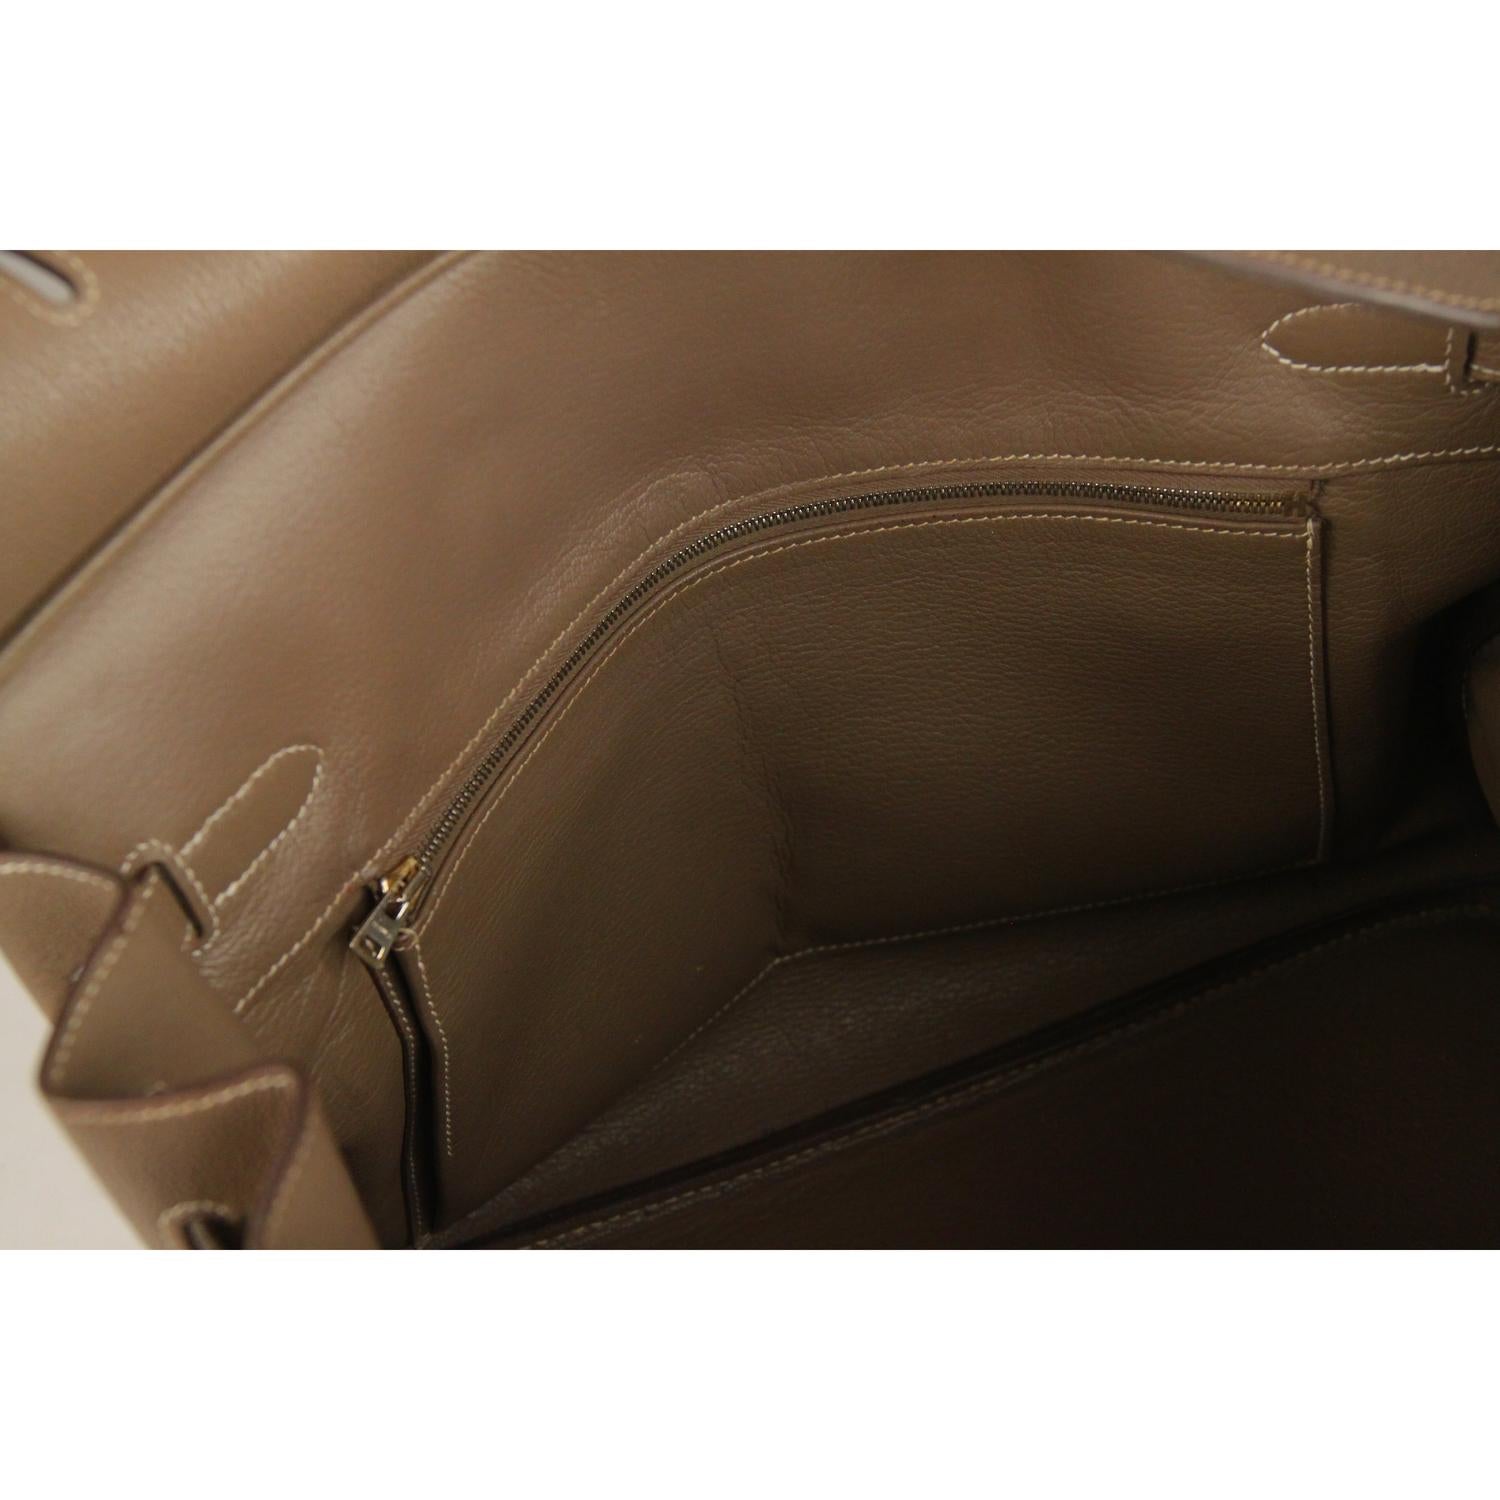 Hermes Taupe Togo Leather Birkin 35 Top Handle Bag Satchel 5